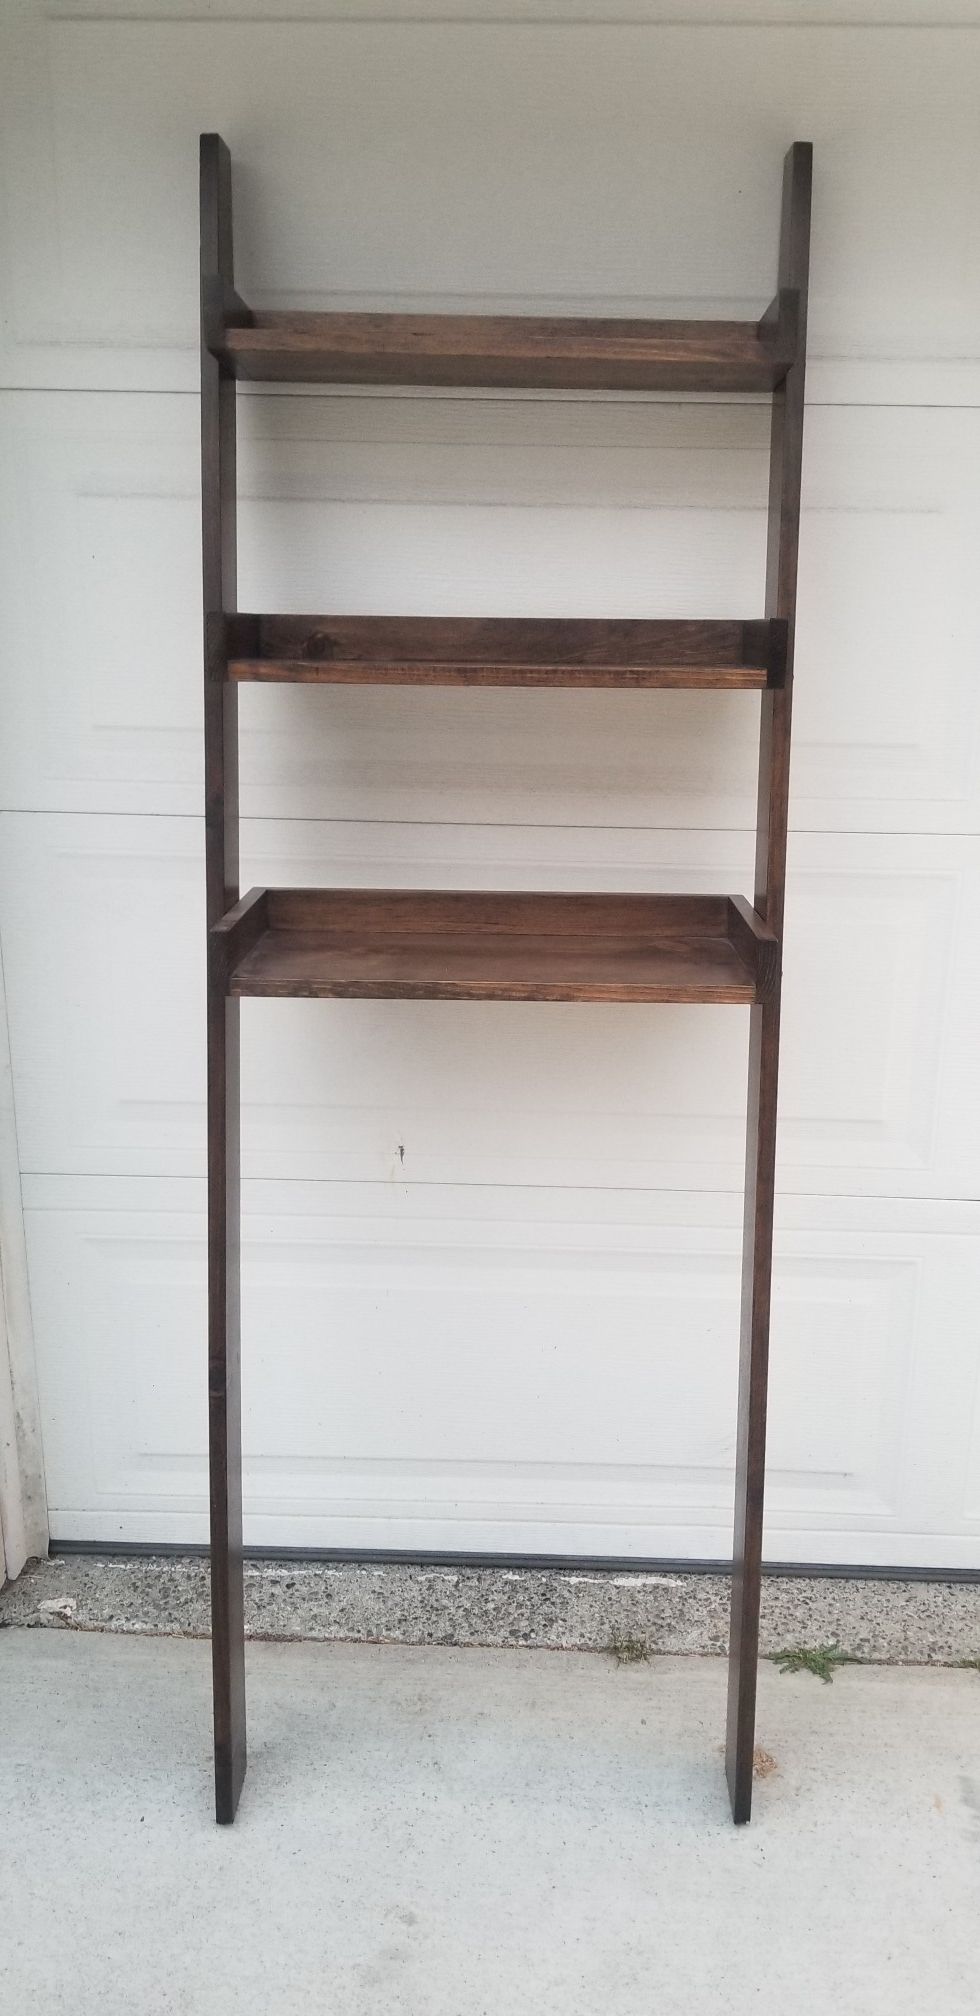 3 tier wooden ladder shelf